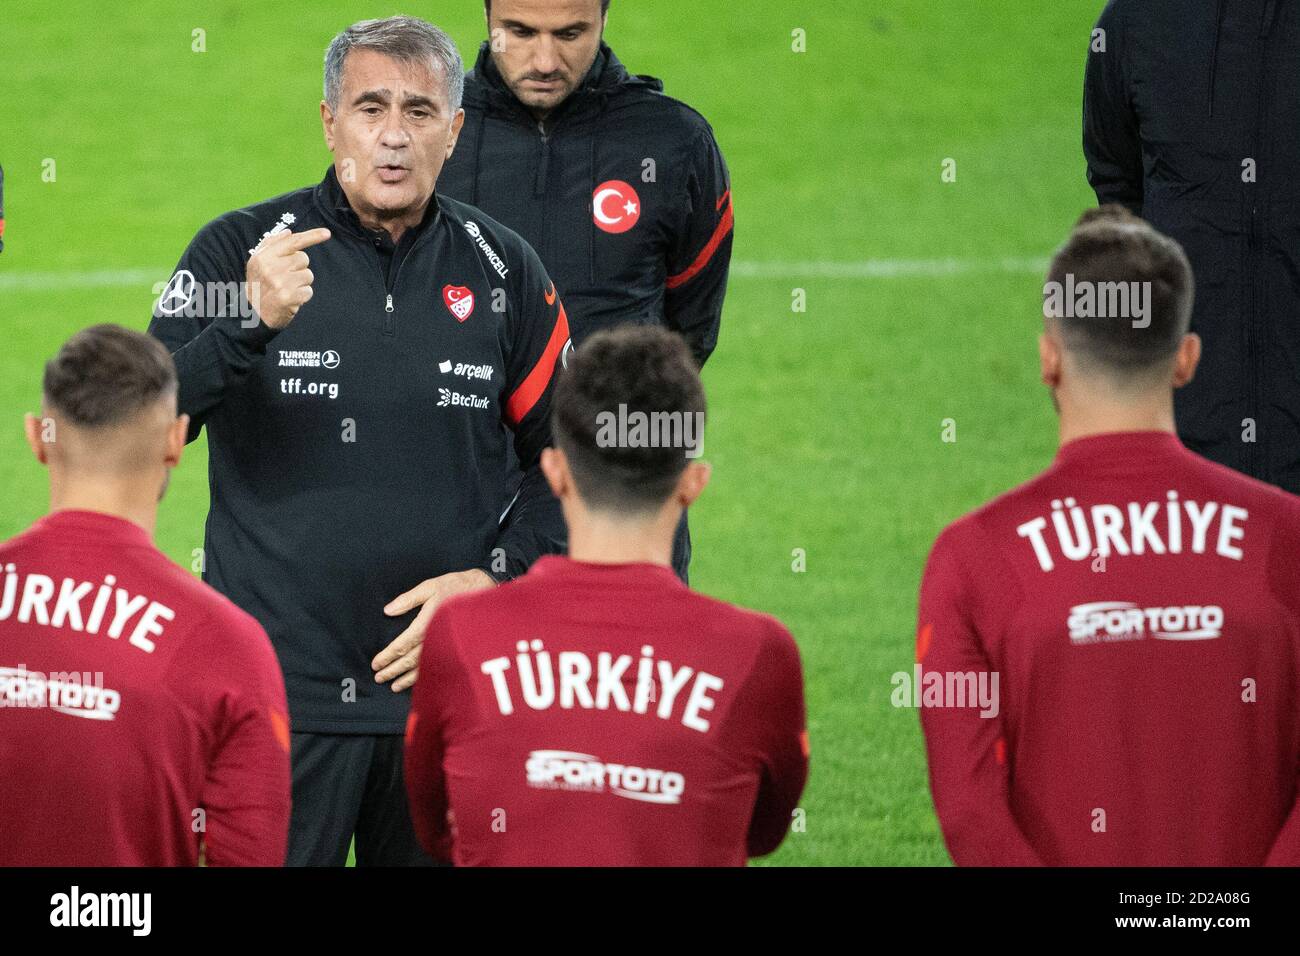 turkey national football team jersey